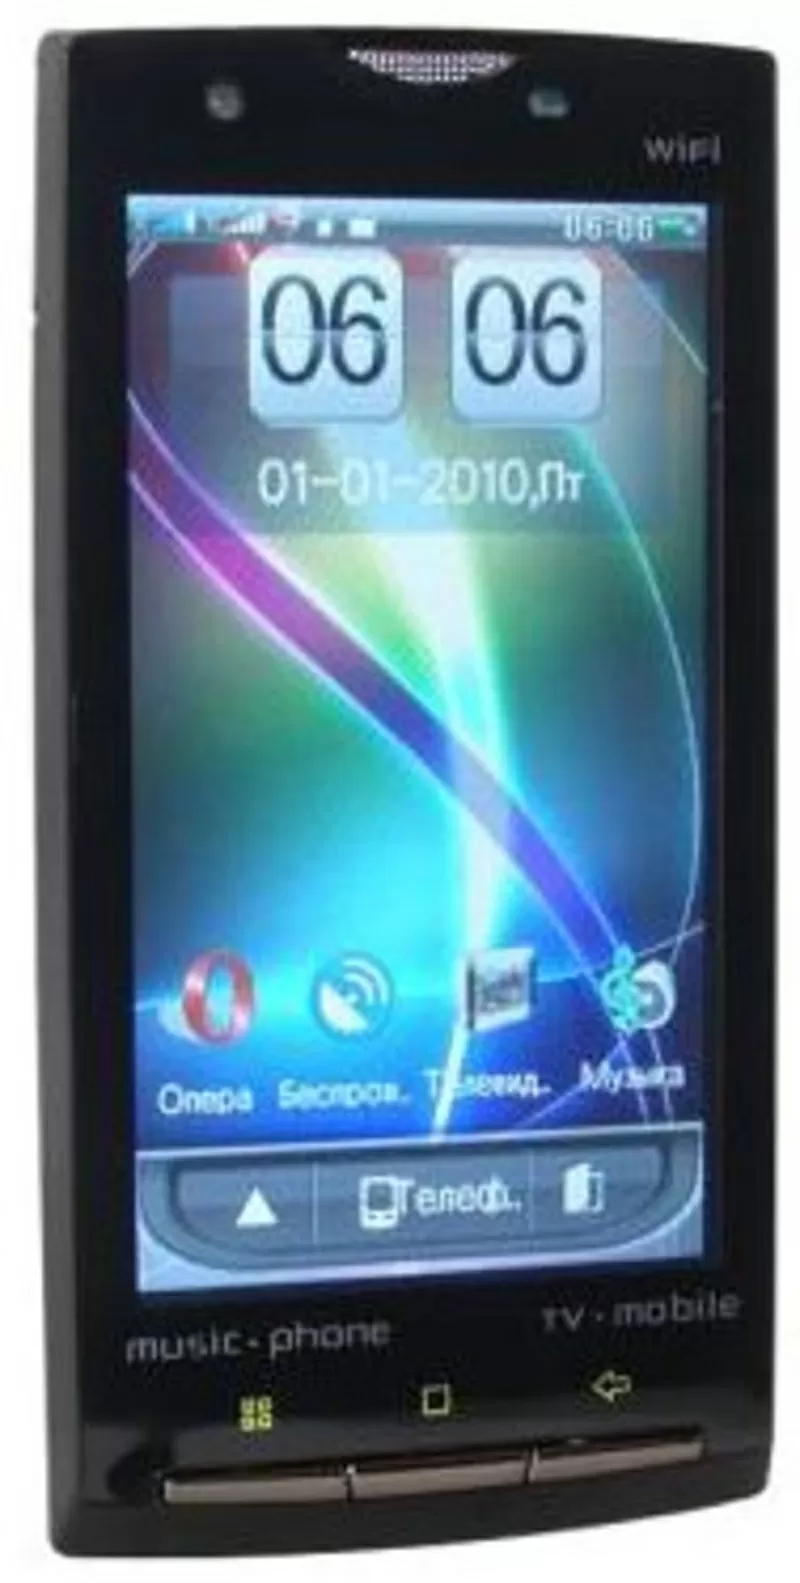 Sony Ericsson XPERIA X10 WI-FI 3.8 3